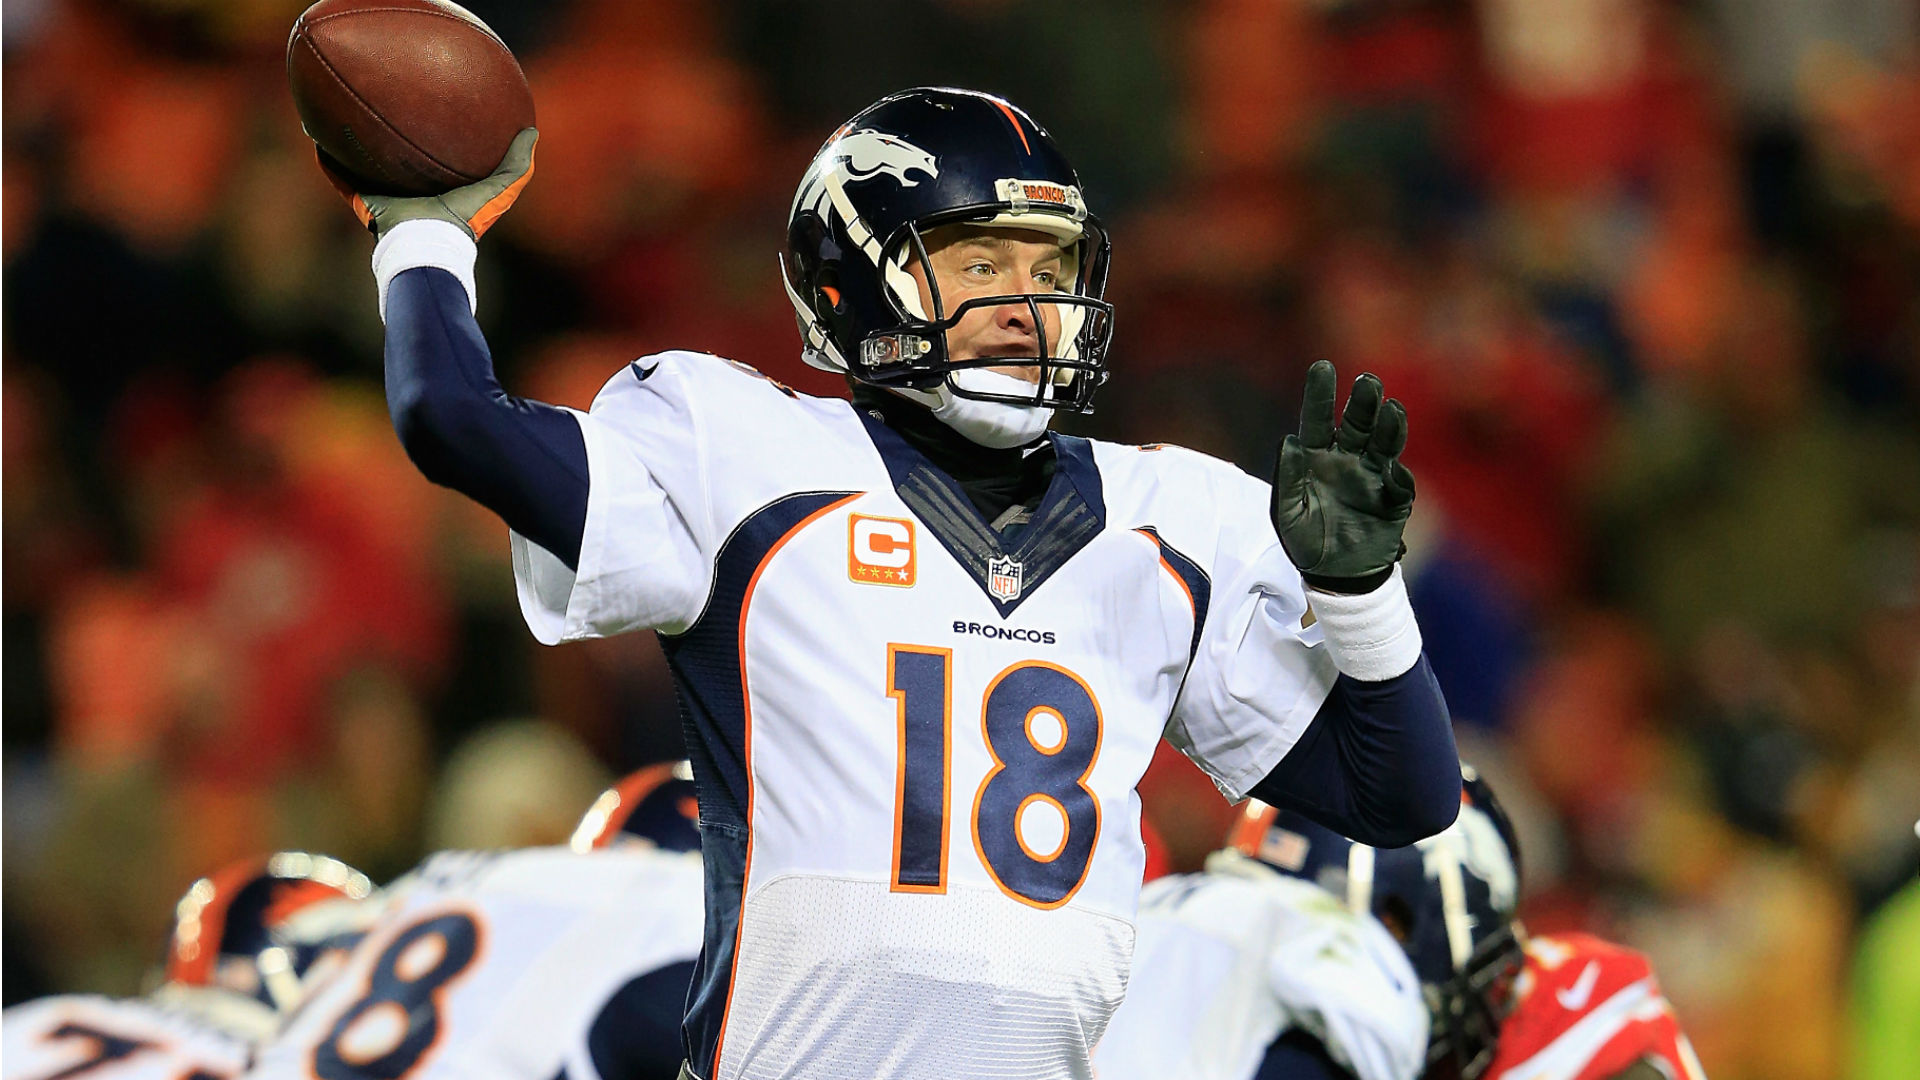 Peyton Manning leads Pro Bowl voting as balloting nears close | Sporting News1920 x 1080